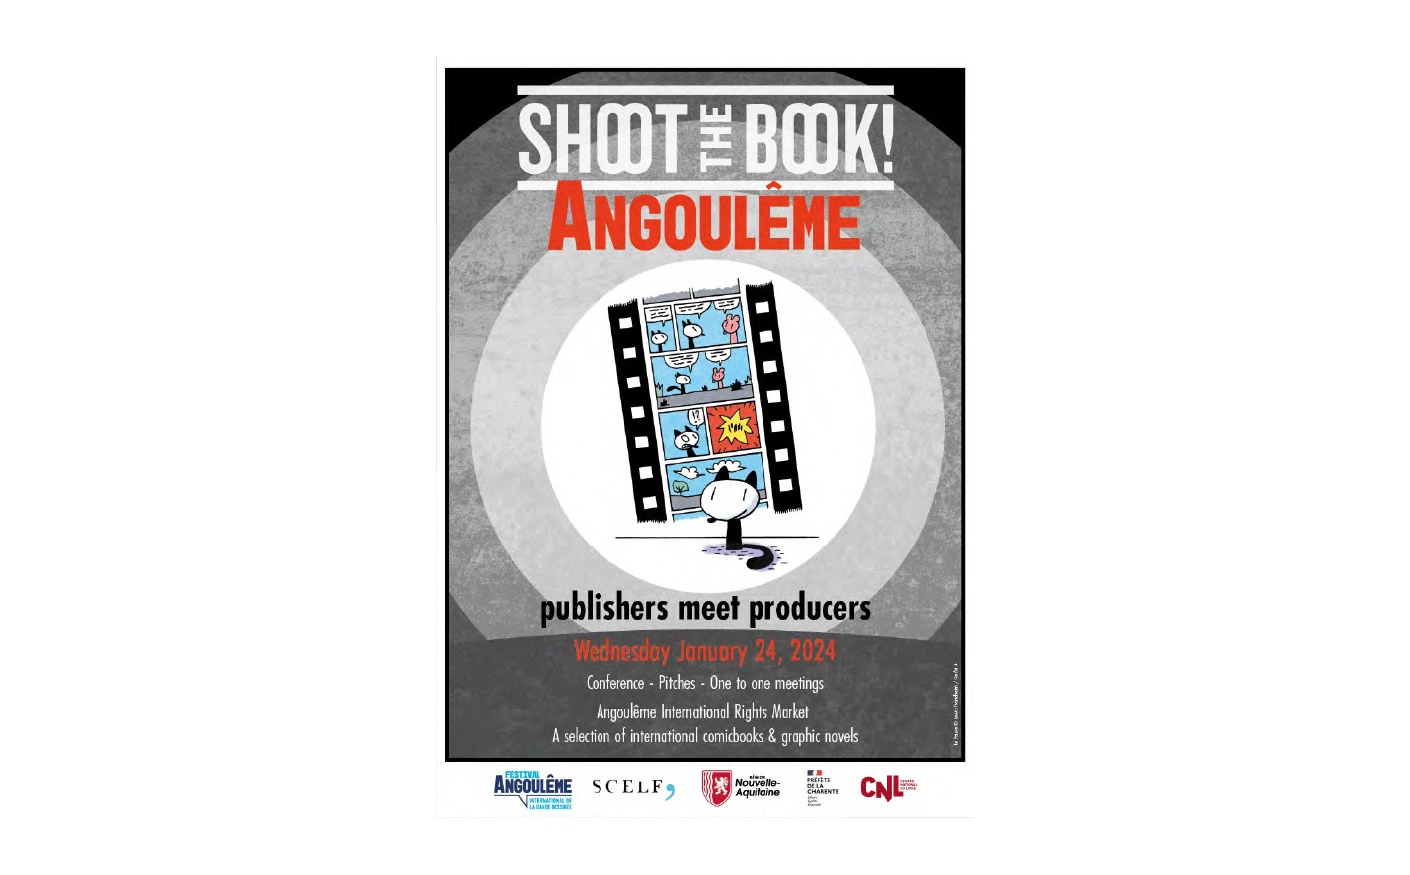 Shoot the book! Angouleme